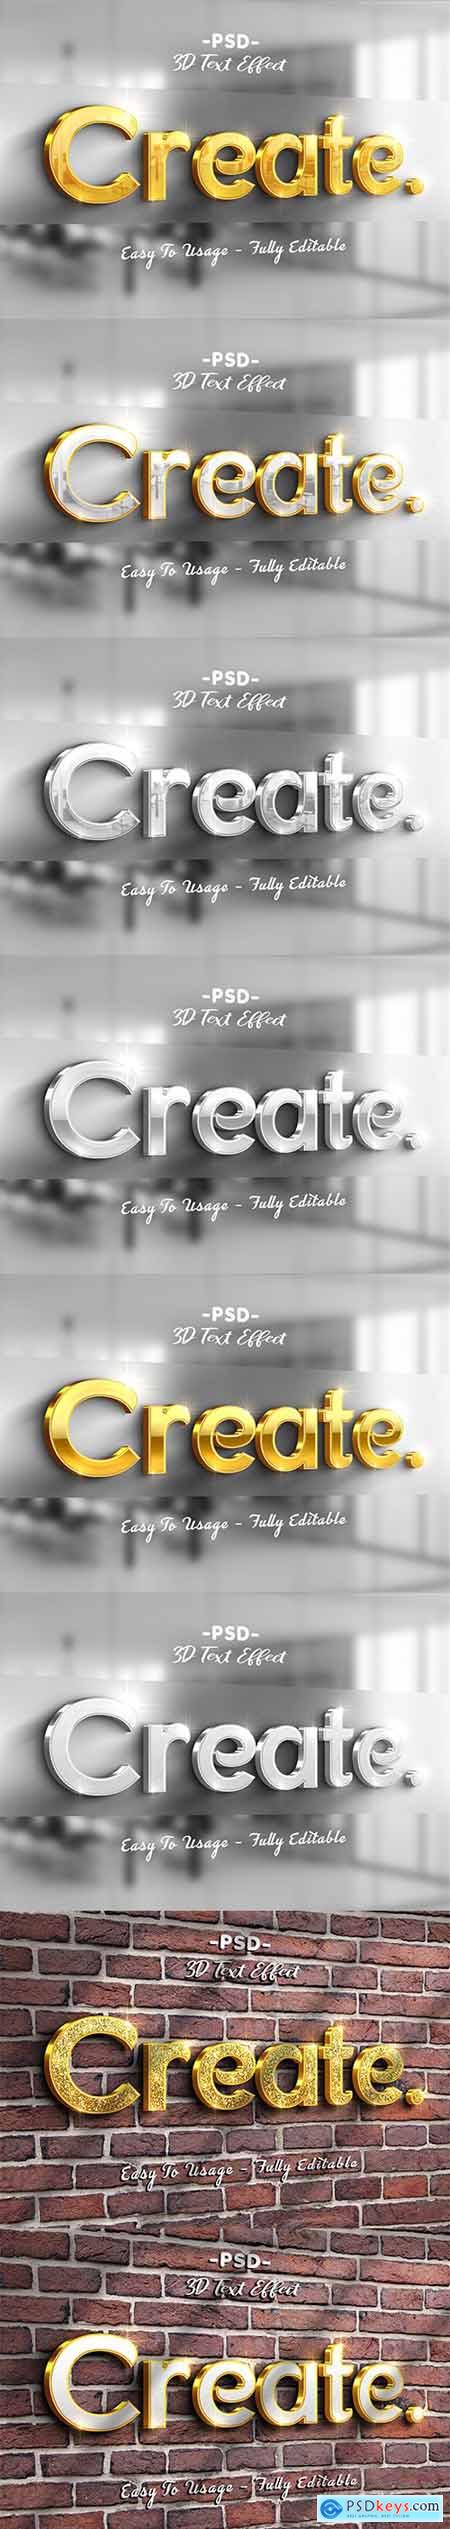 Create 3d golden text style effect